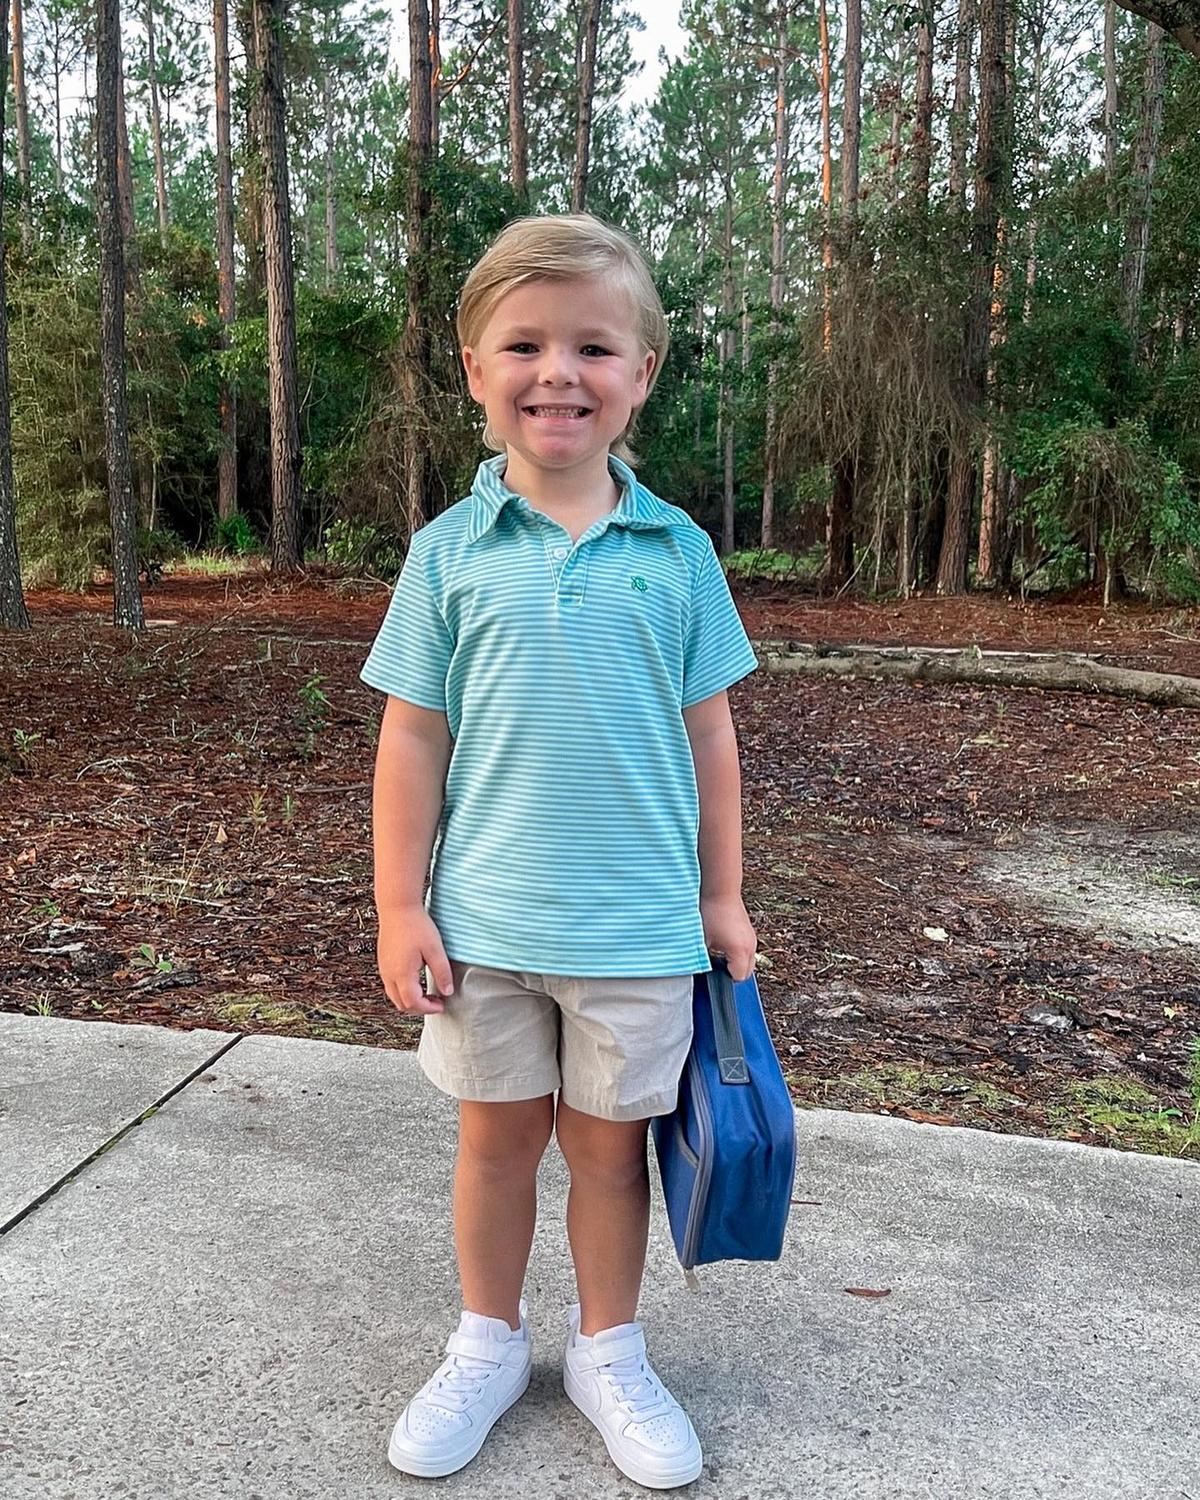 Six-year-old Brodie Kenyon is from Georgia. (Courtesy of <a href="https://www.instagram.com/jess_kenyon_/">Jessica Kenyon</a>)